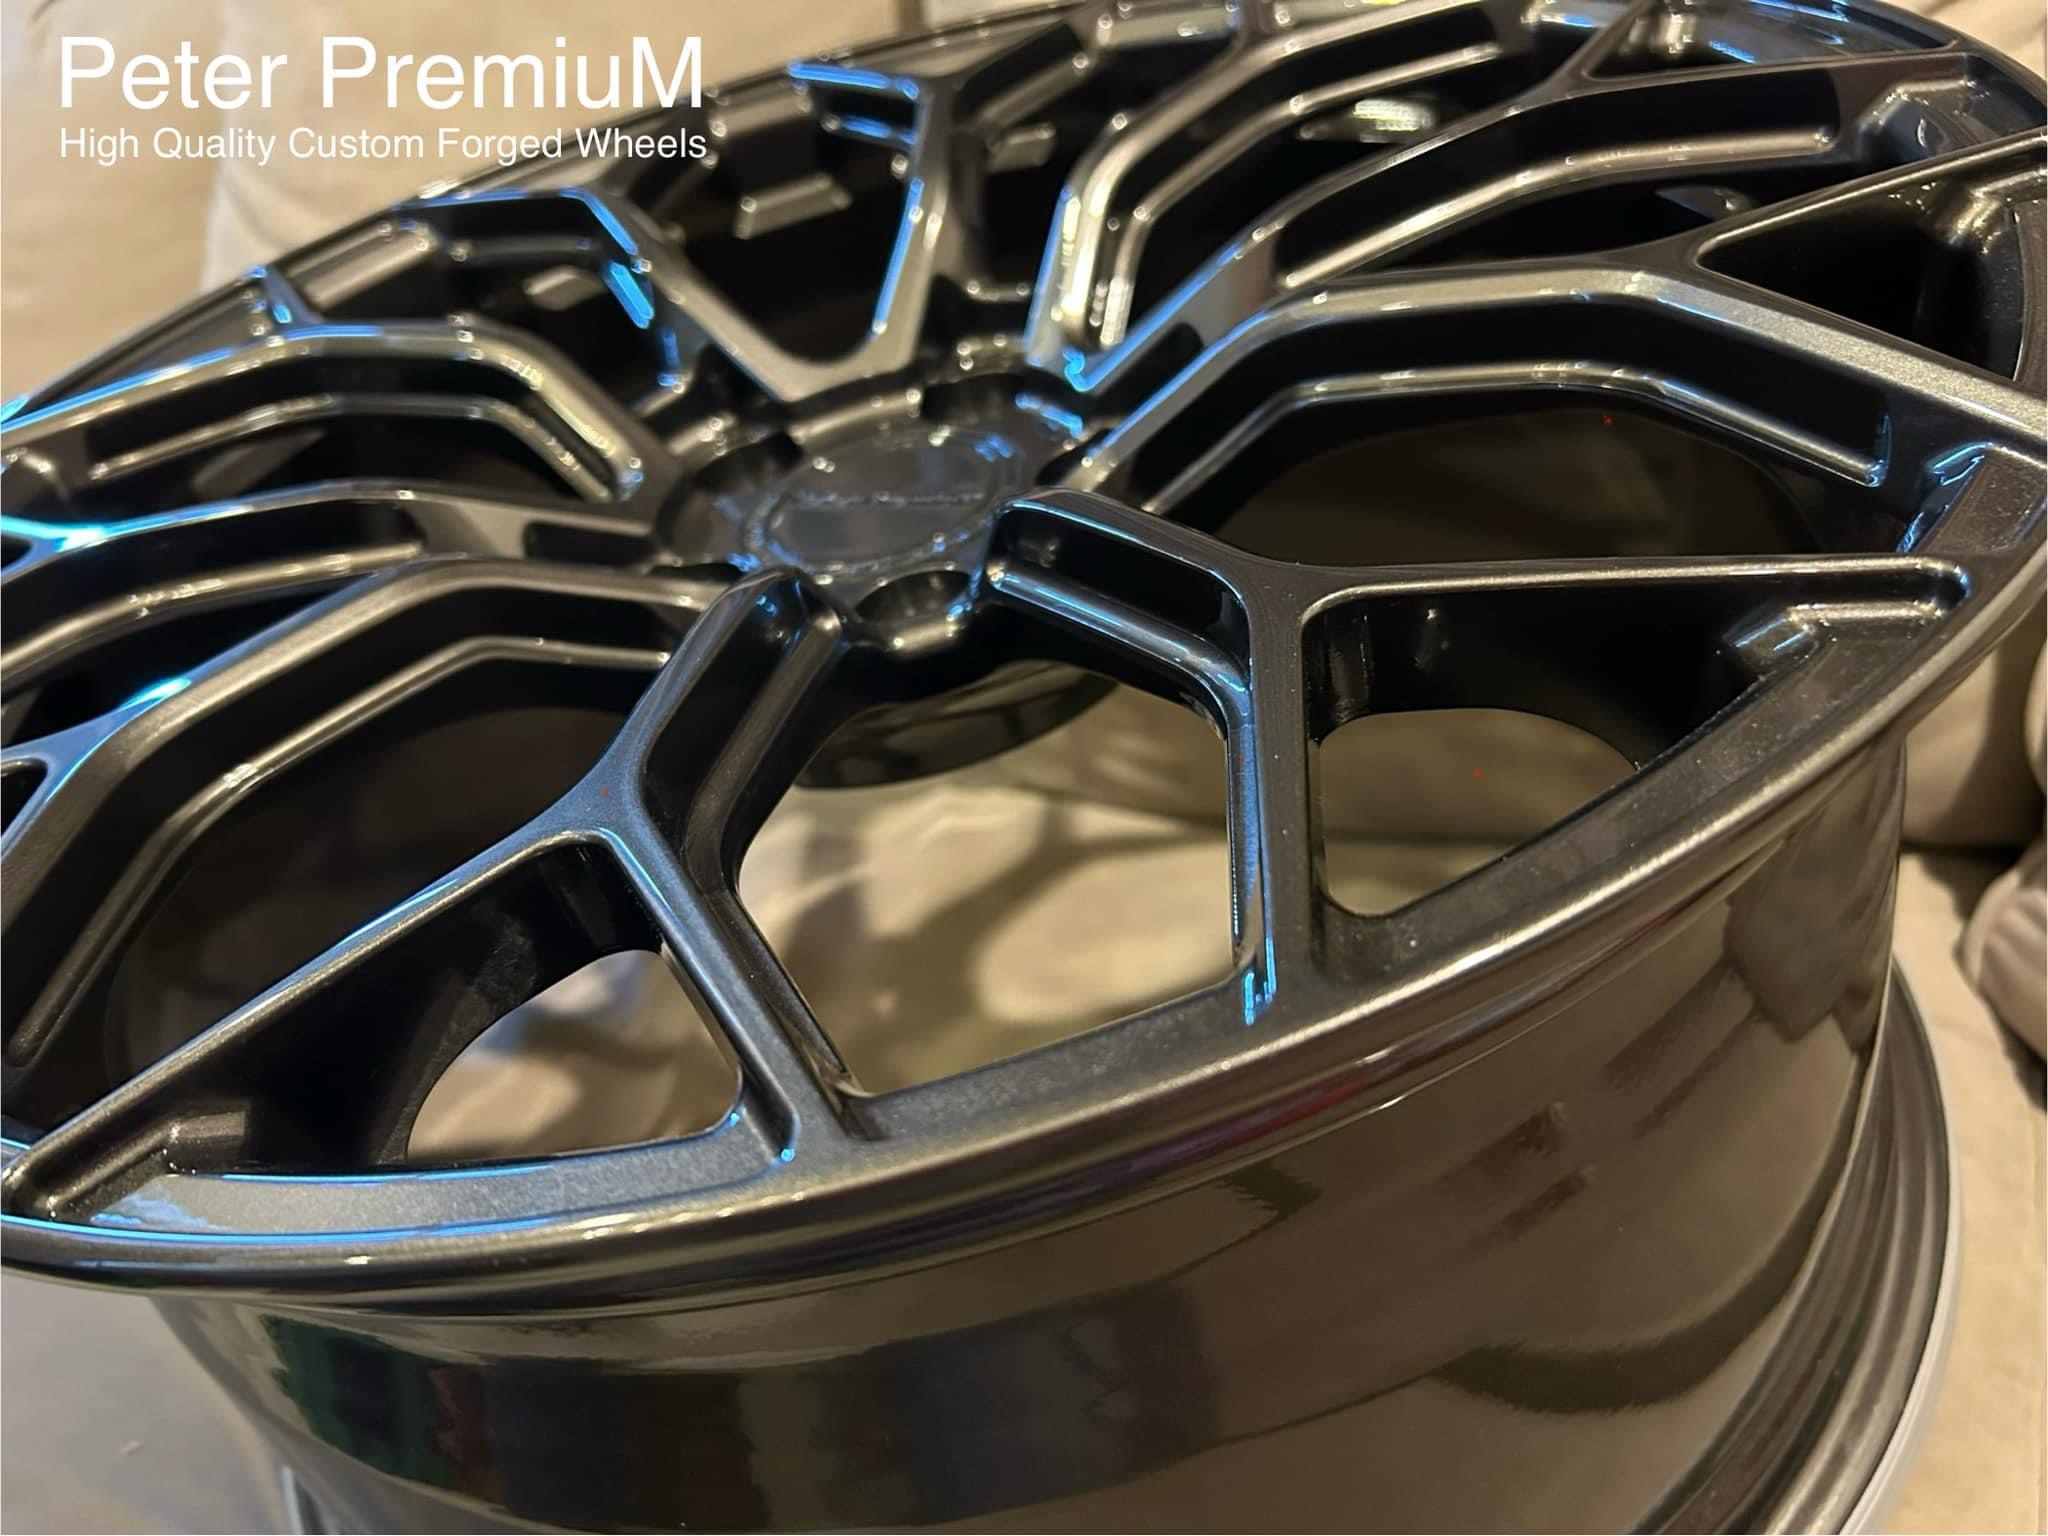 Peter PremiuM - High Quality Custom Forged Wheels (ผลิตและจำหน่าย) รับรองคุณภาพและความพึงพอใจสูงสุด